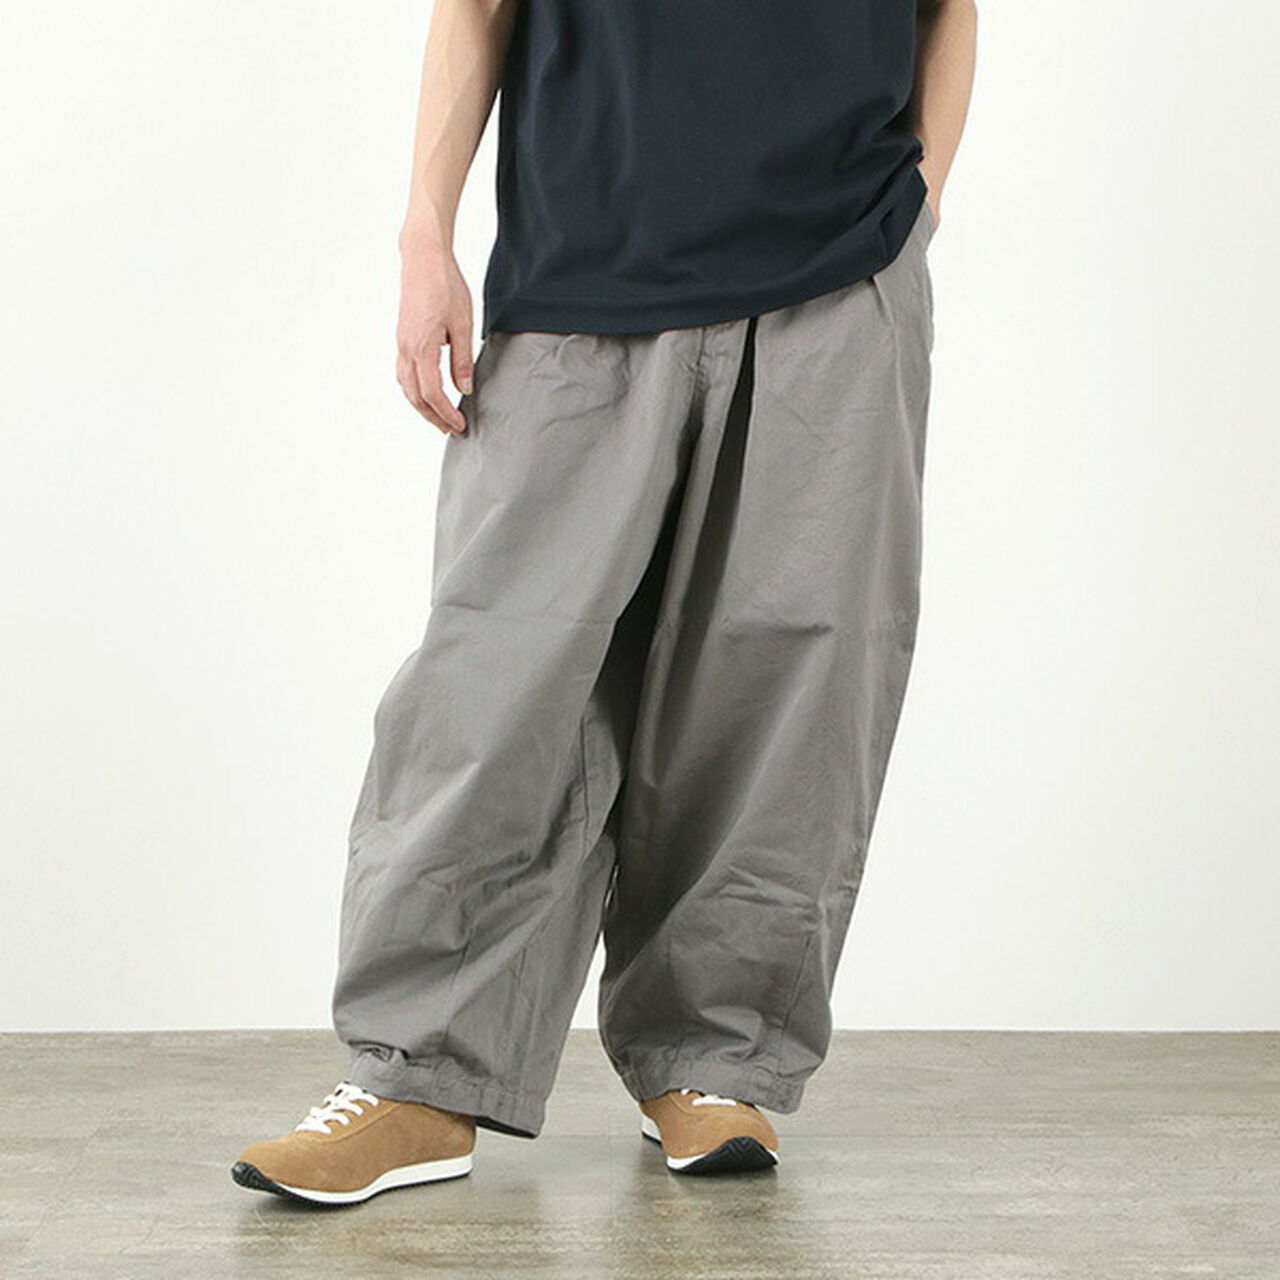 Cotton Chino Circus Pants,Grey, large image number 0